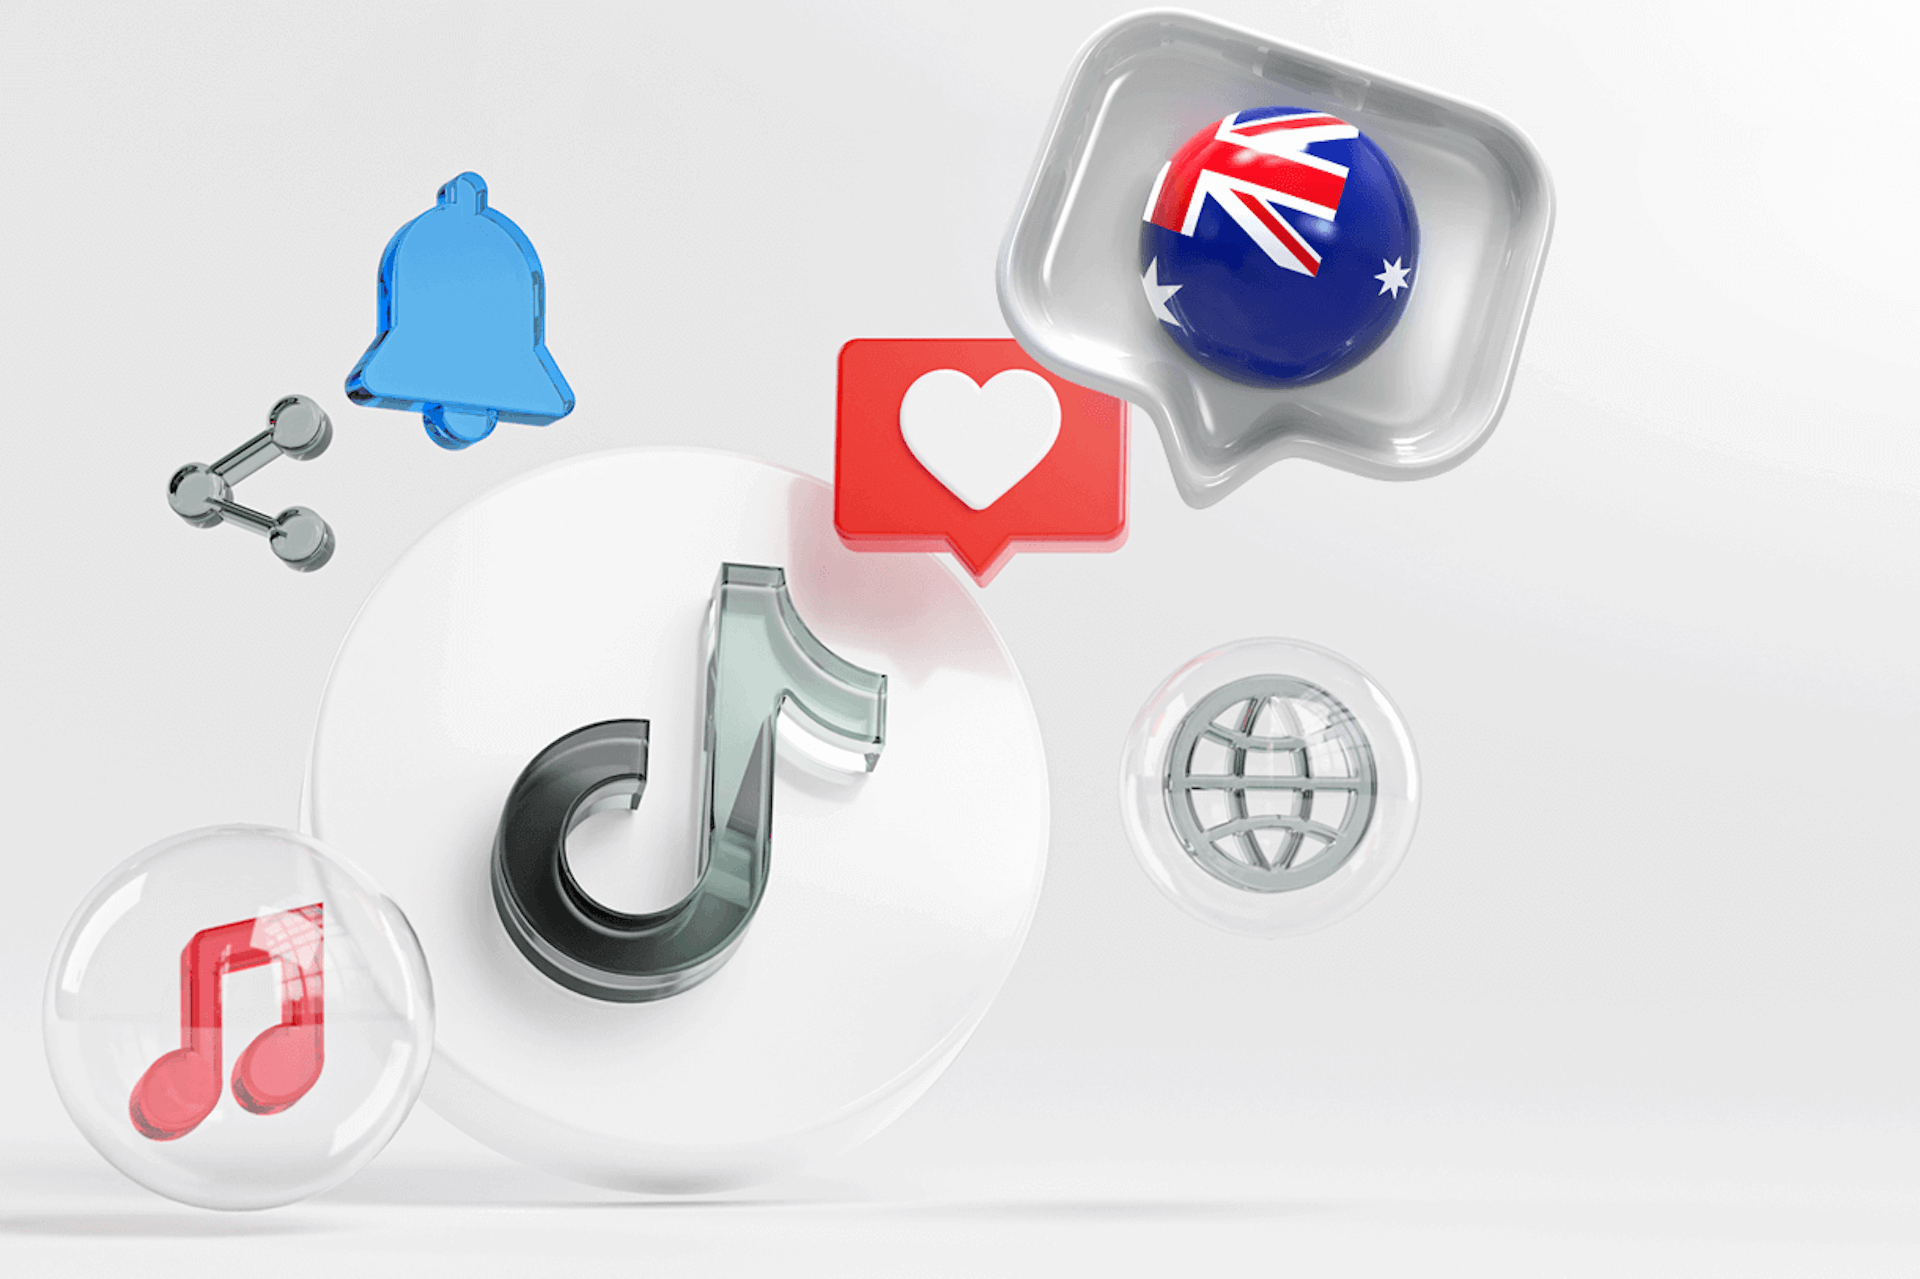 3D illustration of a TikTok logo and the Australian flag for our blog listing the top Australian TikTokers